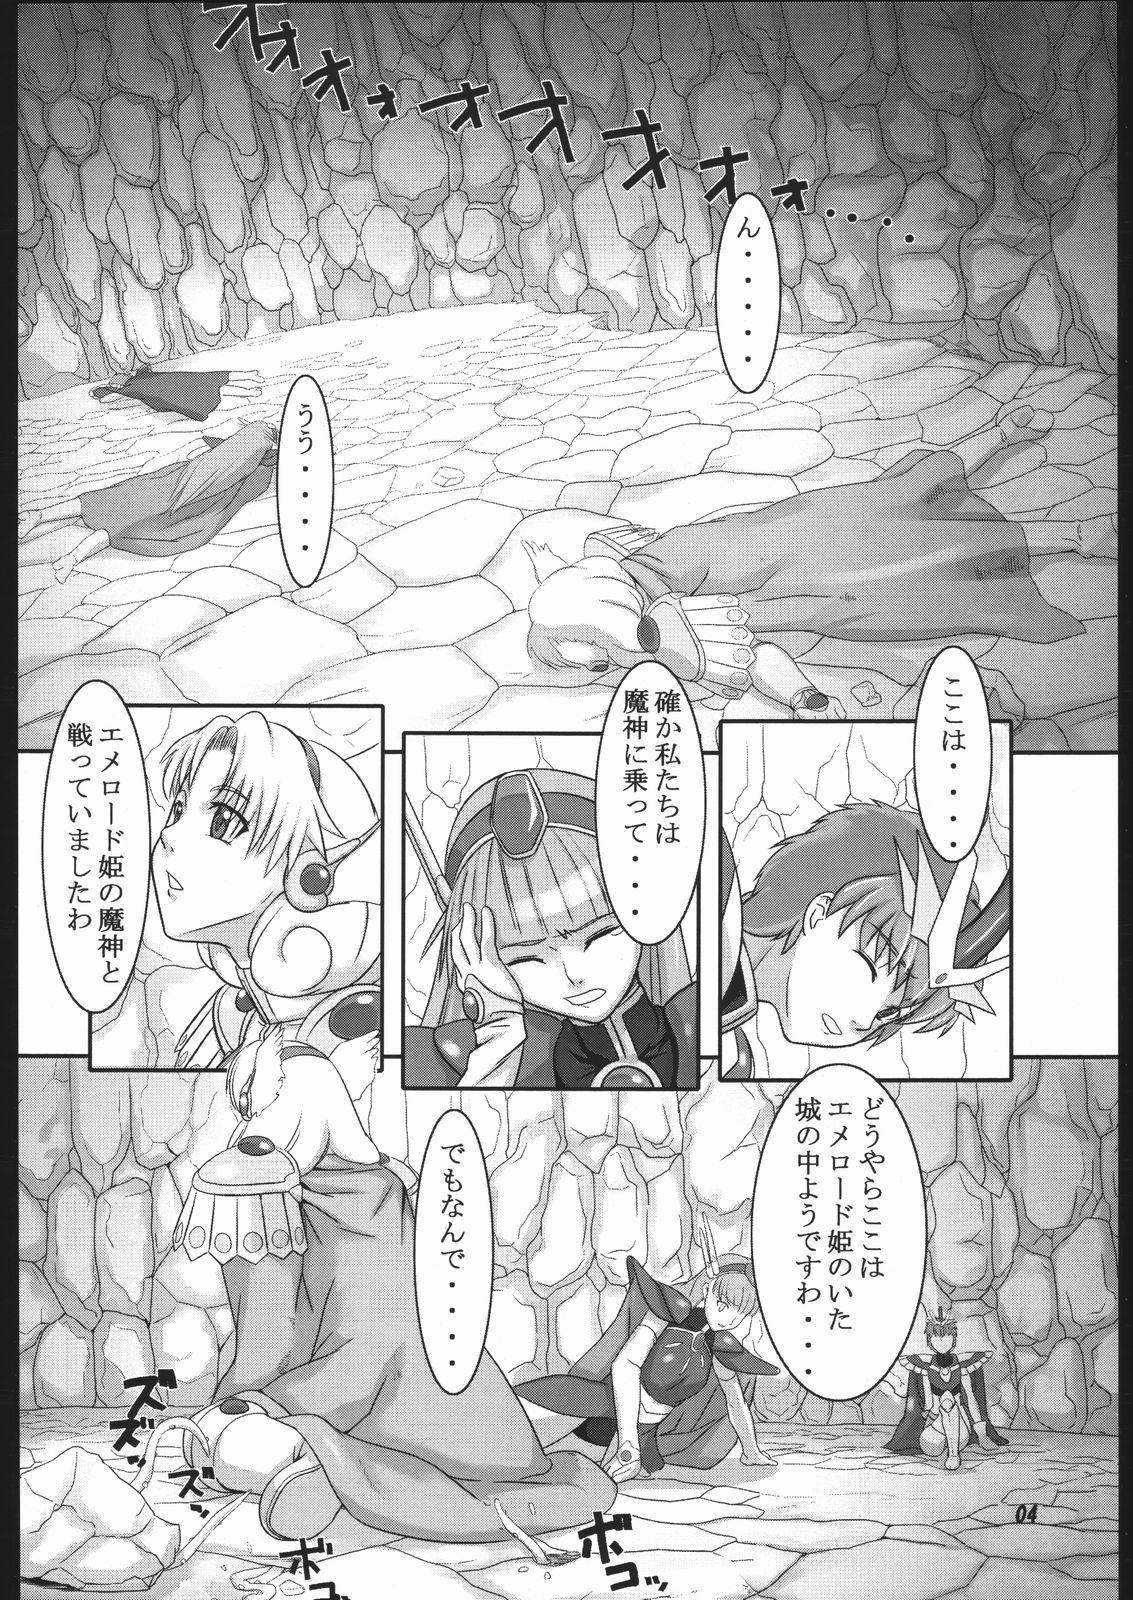 Chupando Mahou no Ori - Magic knight rayearth Amatures Gone Wild - Page 3